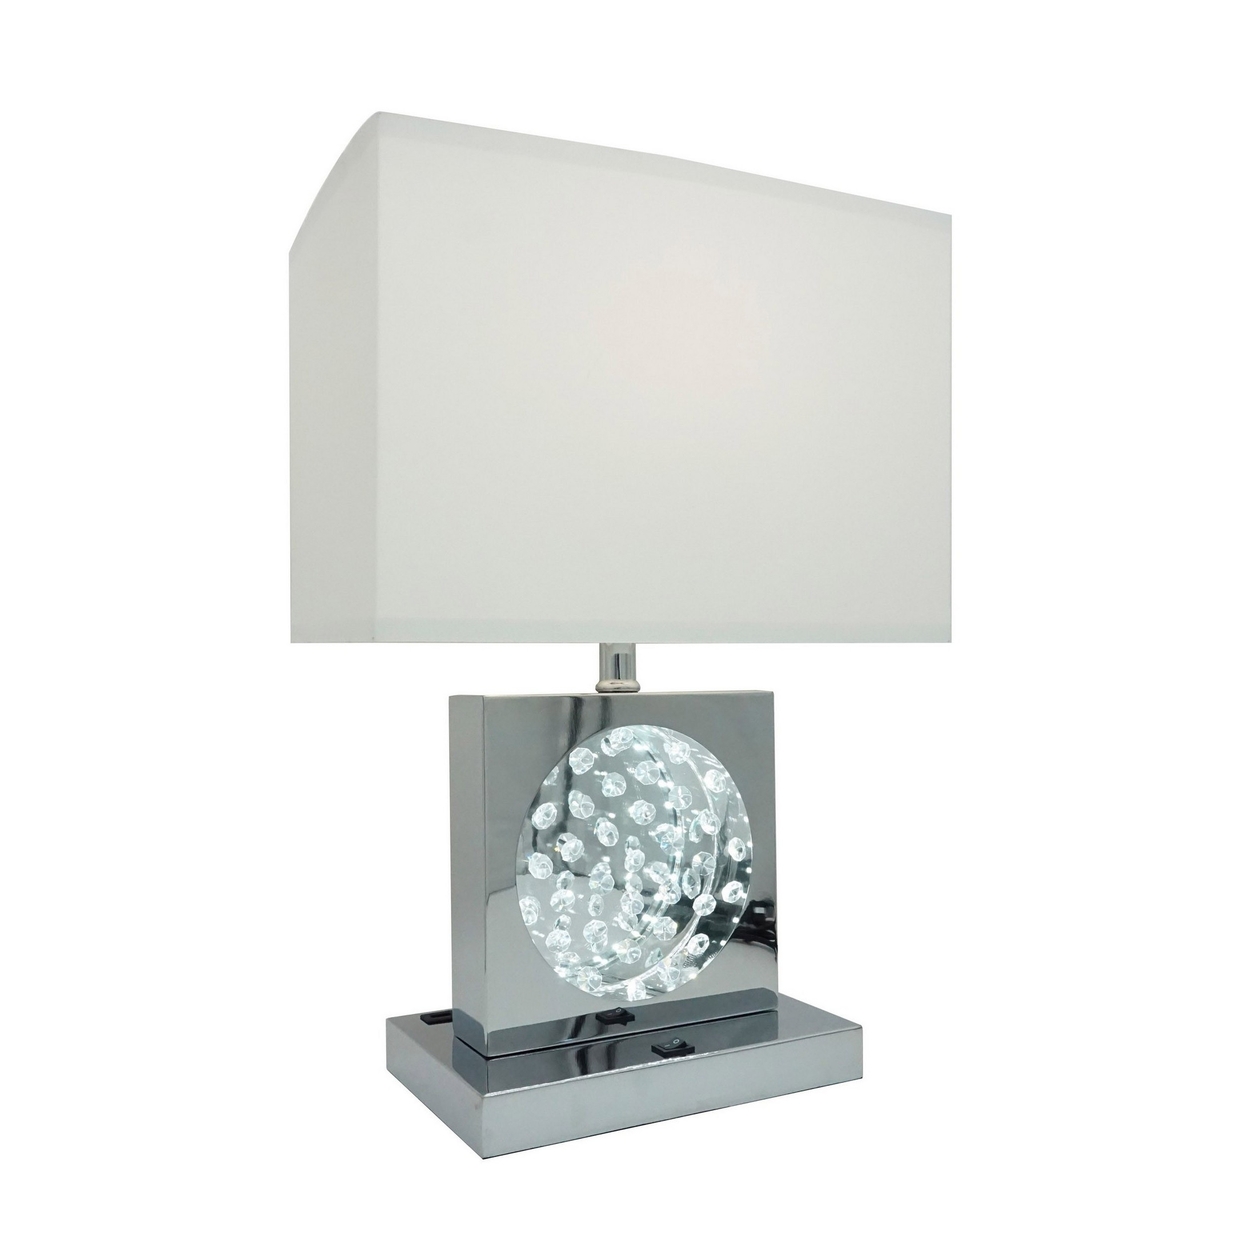 Rohi 22 Inch Table Lamp, White Fabric Shade, Chrome Base, LED Accents- Saltoro Sherpi